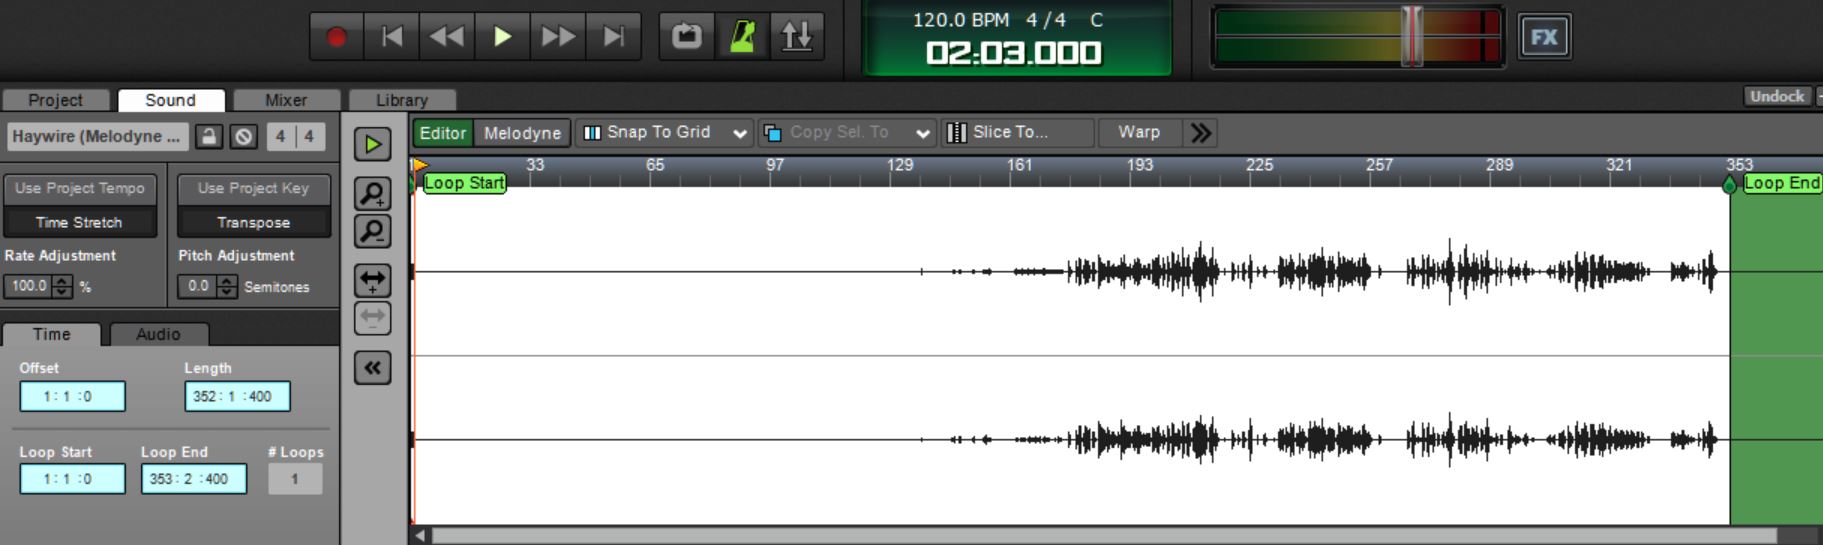 Mixcraft sound tab with Melodyne.jpg